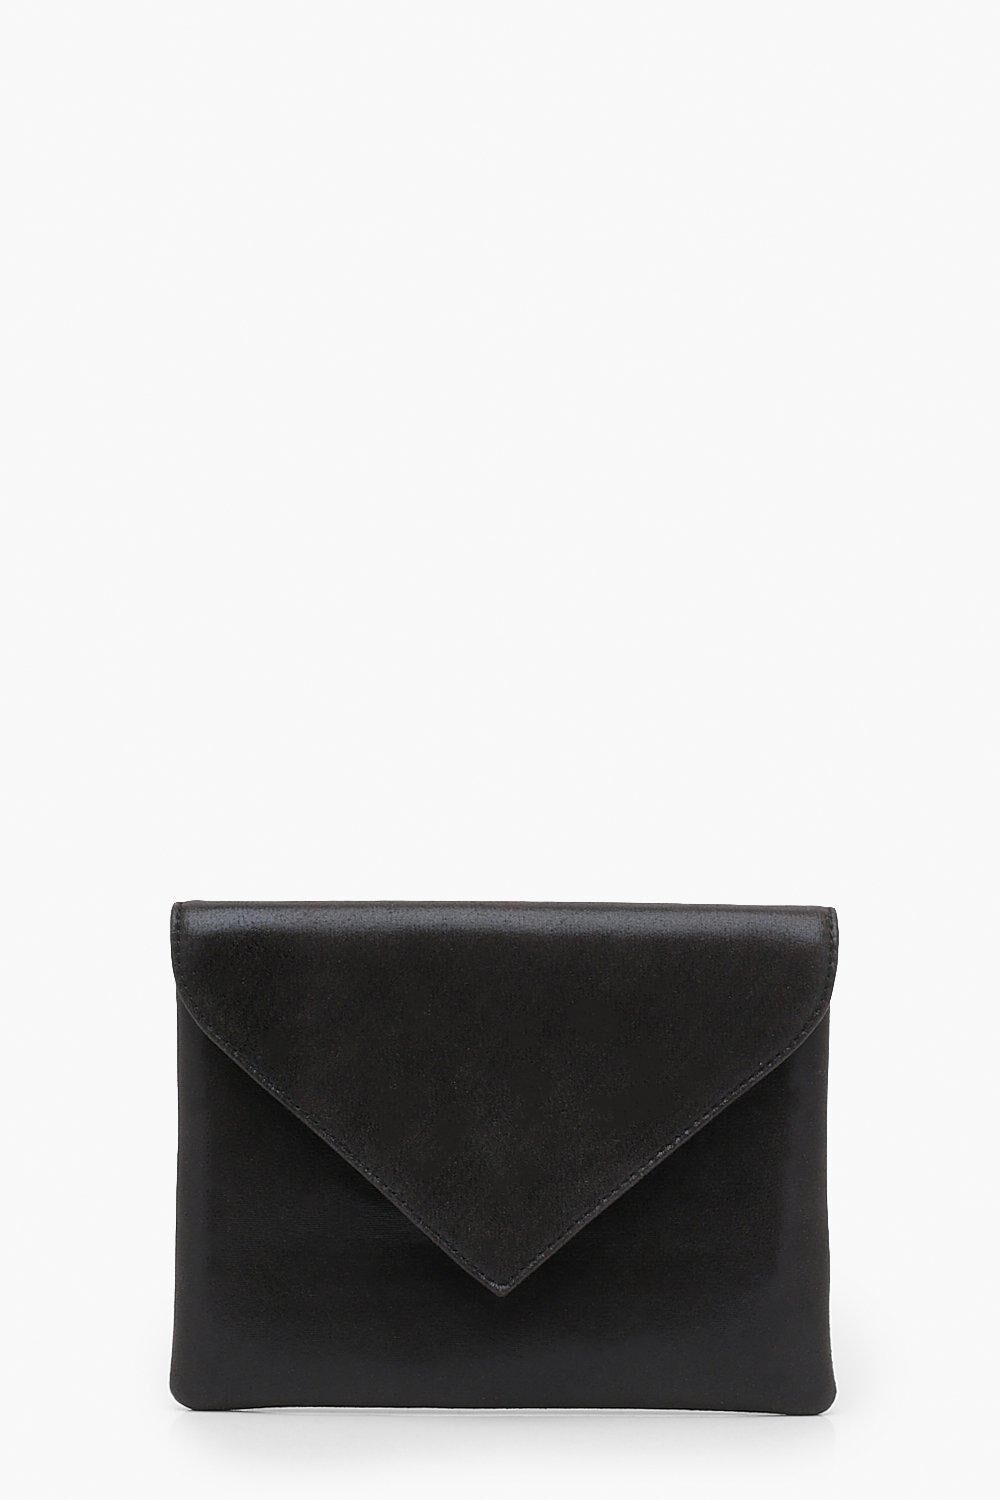 Boohoo Shimmer Envelope Clutch- Black  - Size: ONE SIZE